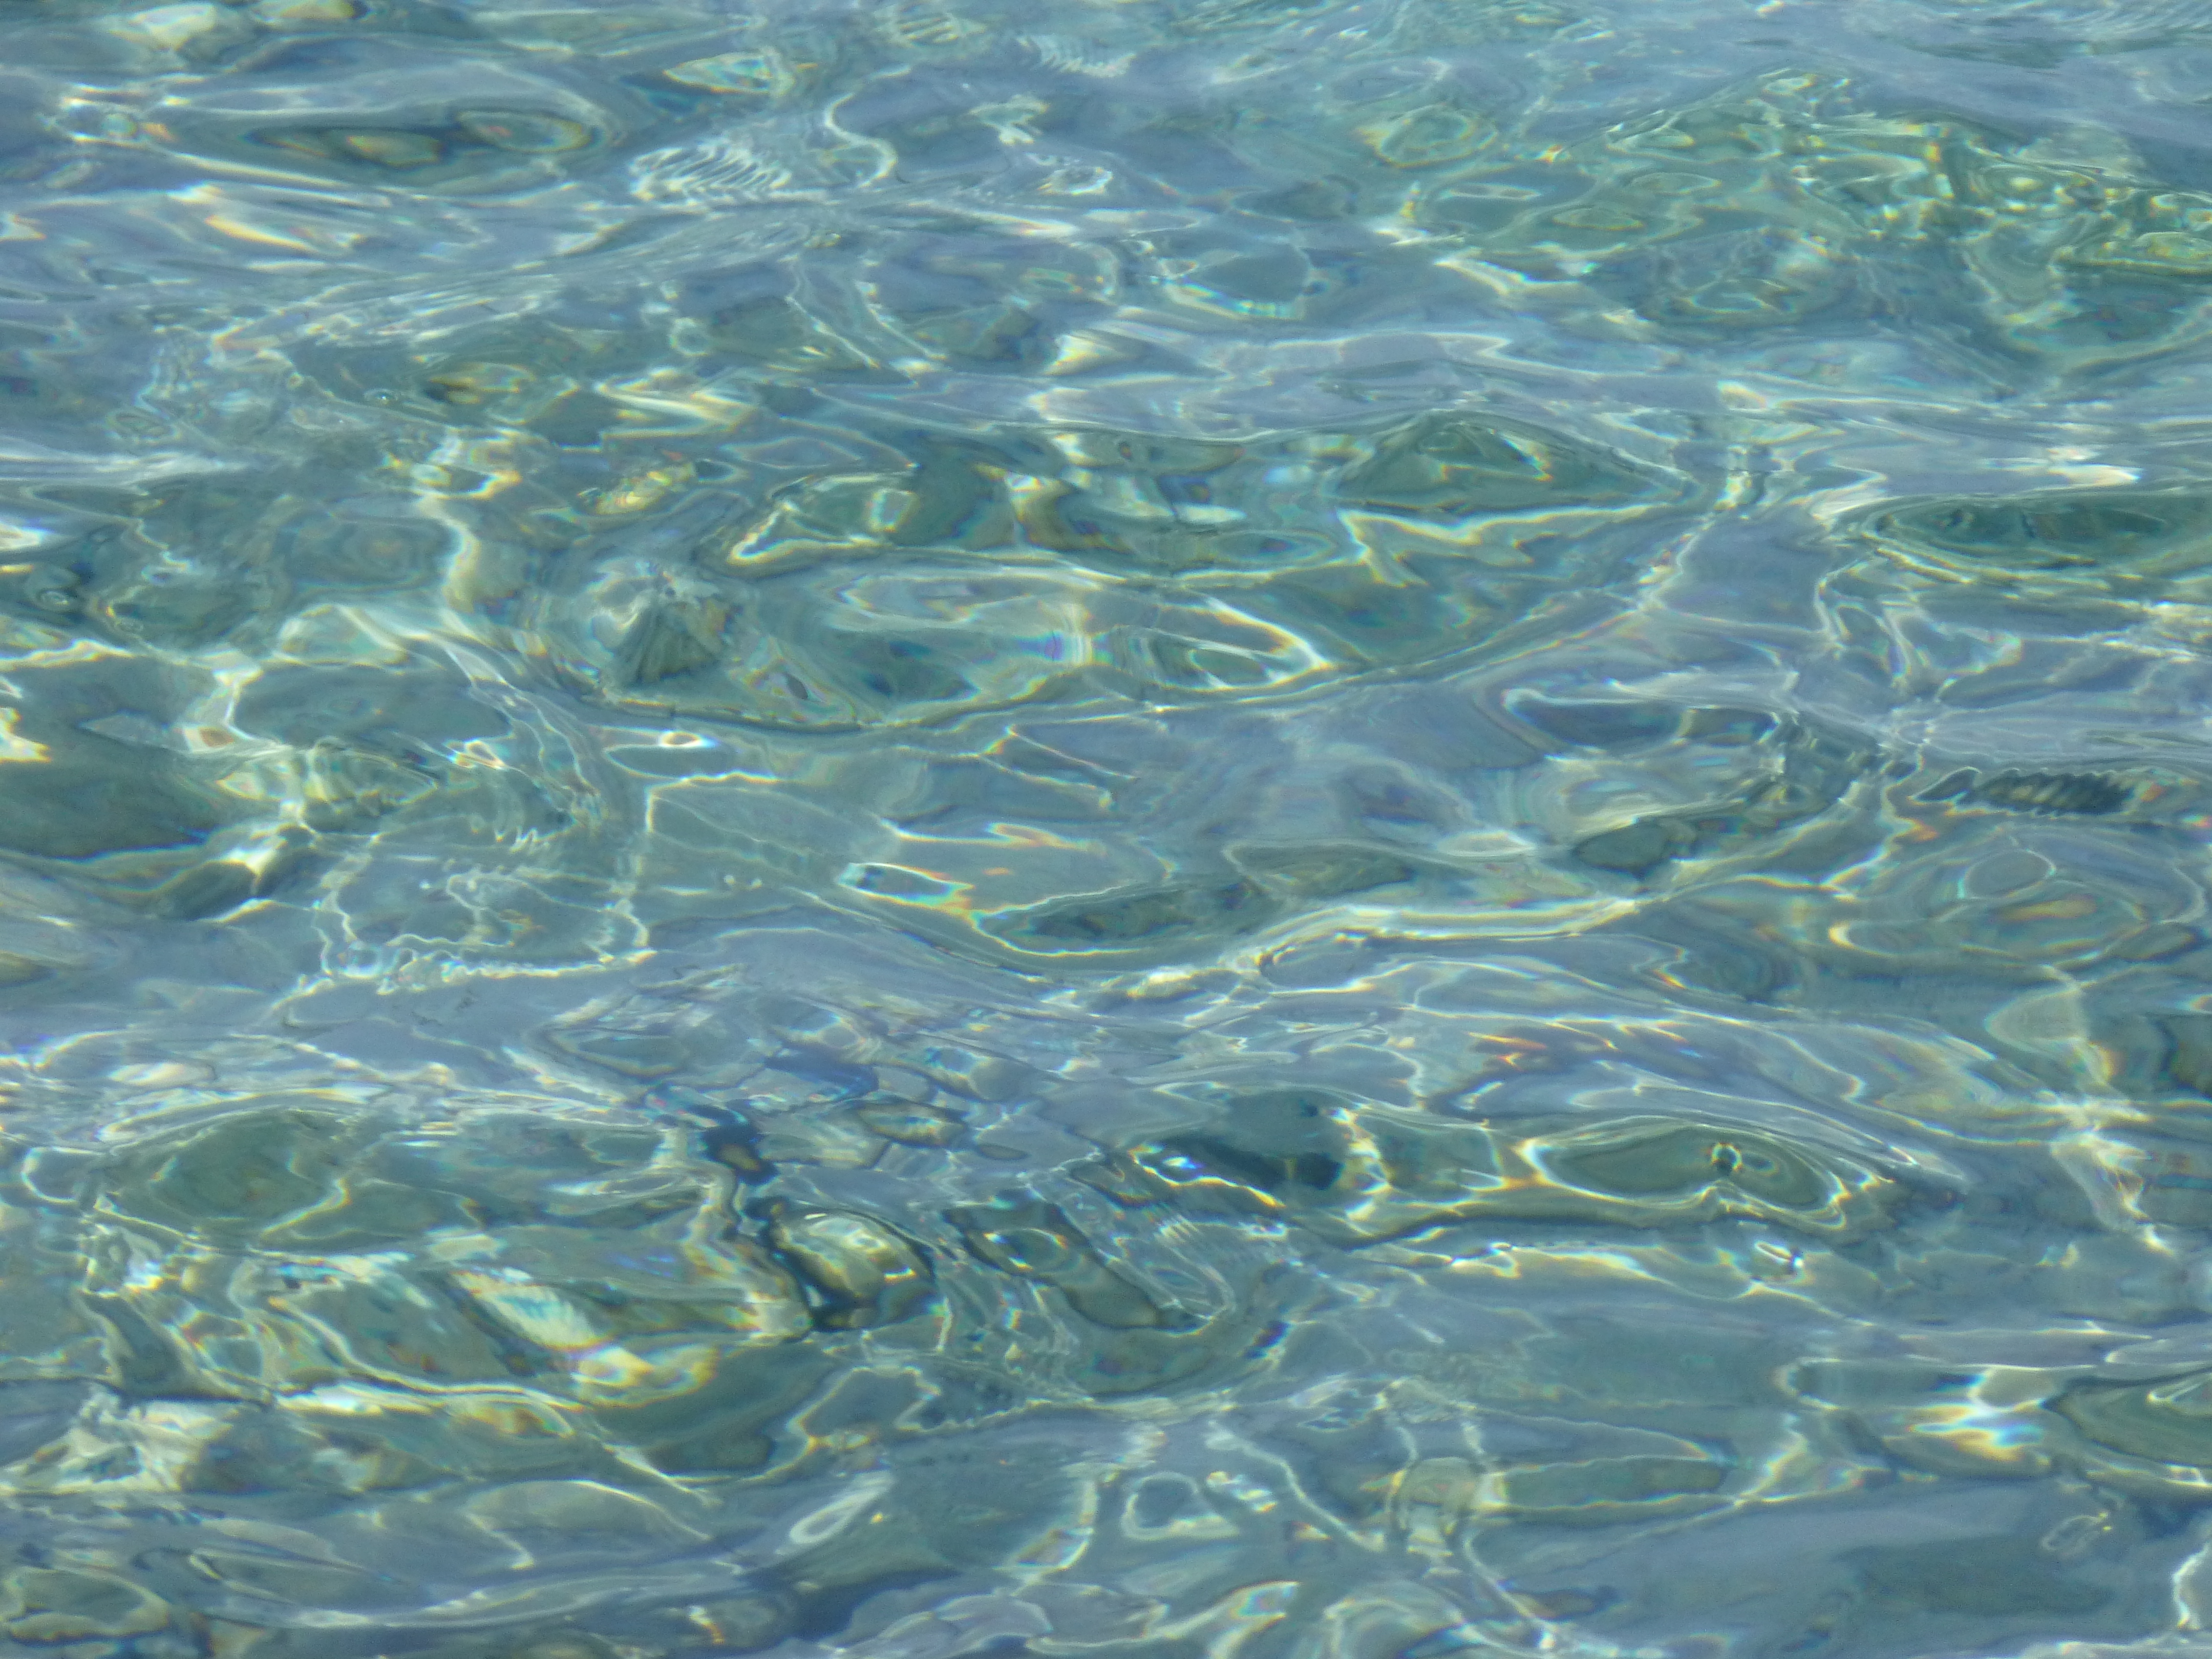 File:Water texture 1390073 Nevit.jpg - Wikimedia Commons